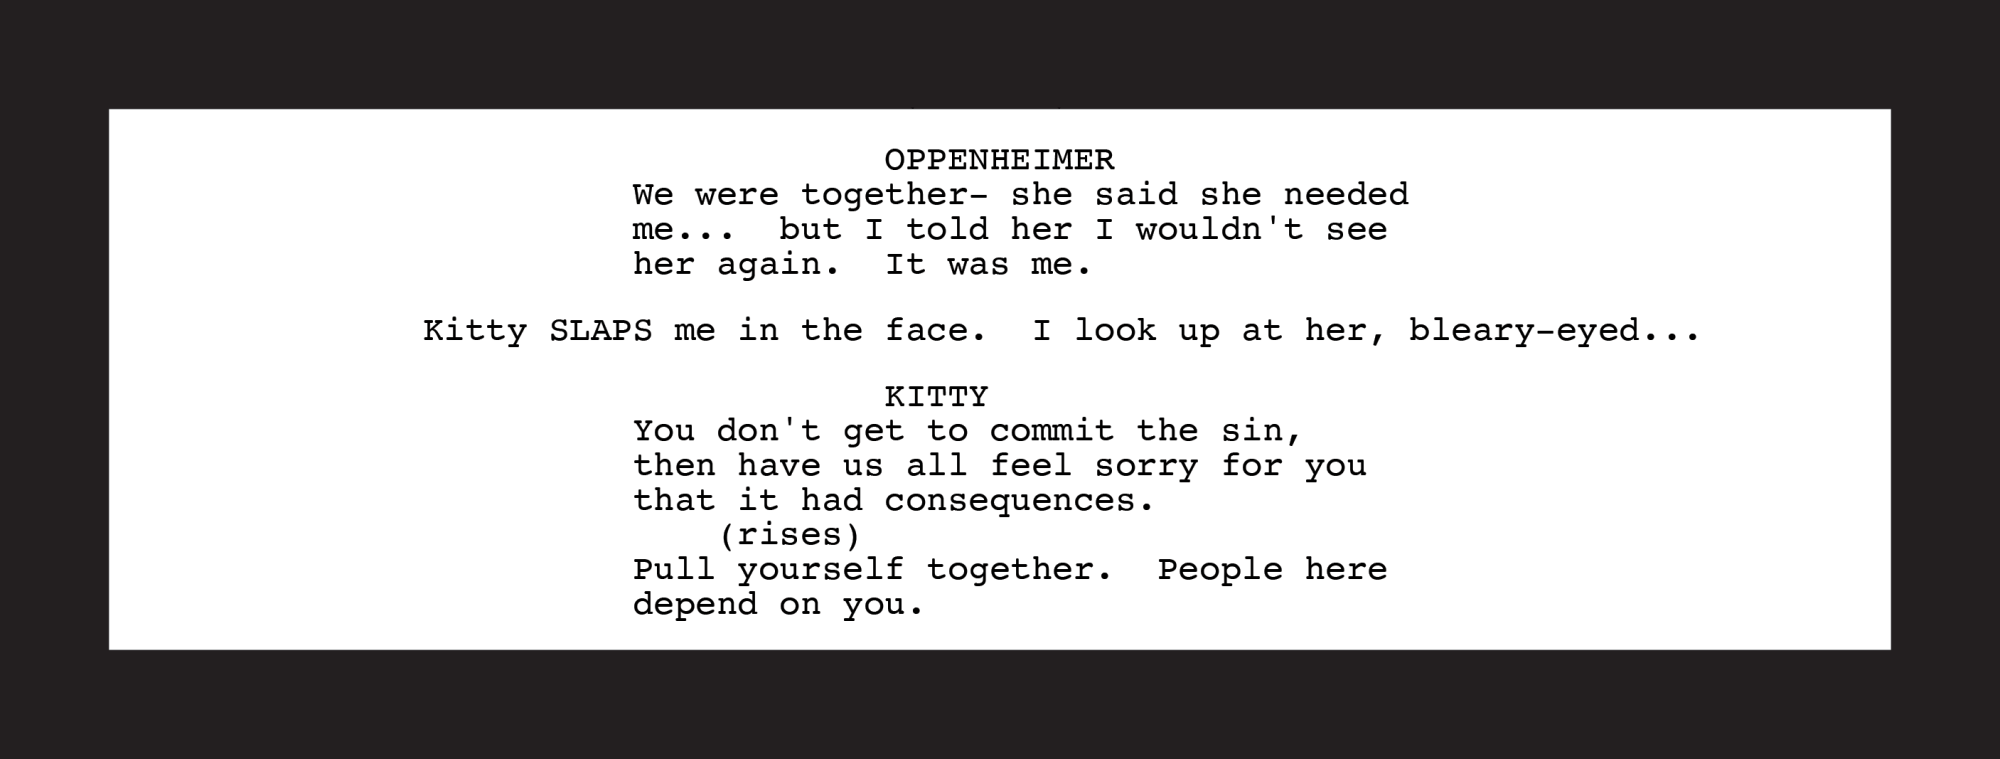 Oppenheimer Script of scene Jean's Death